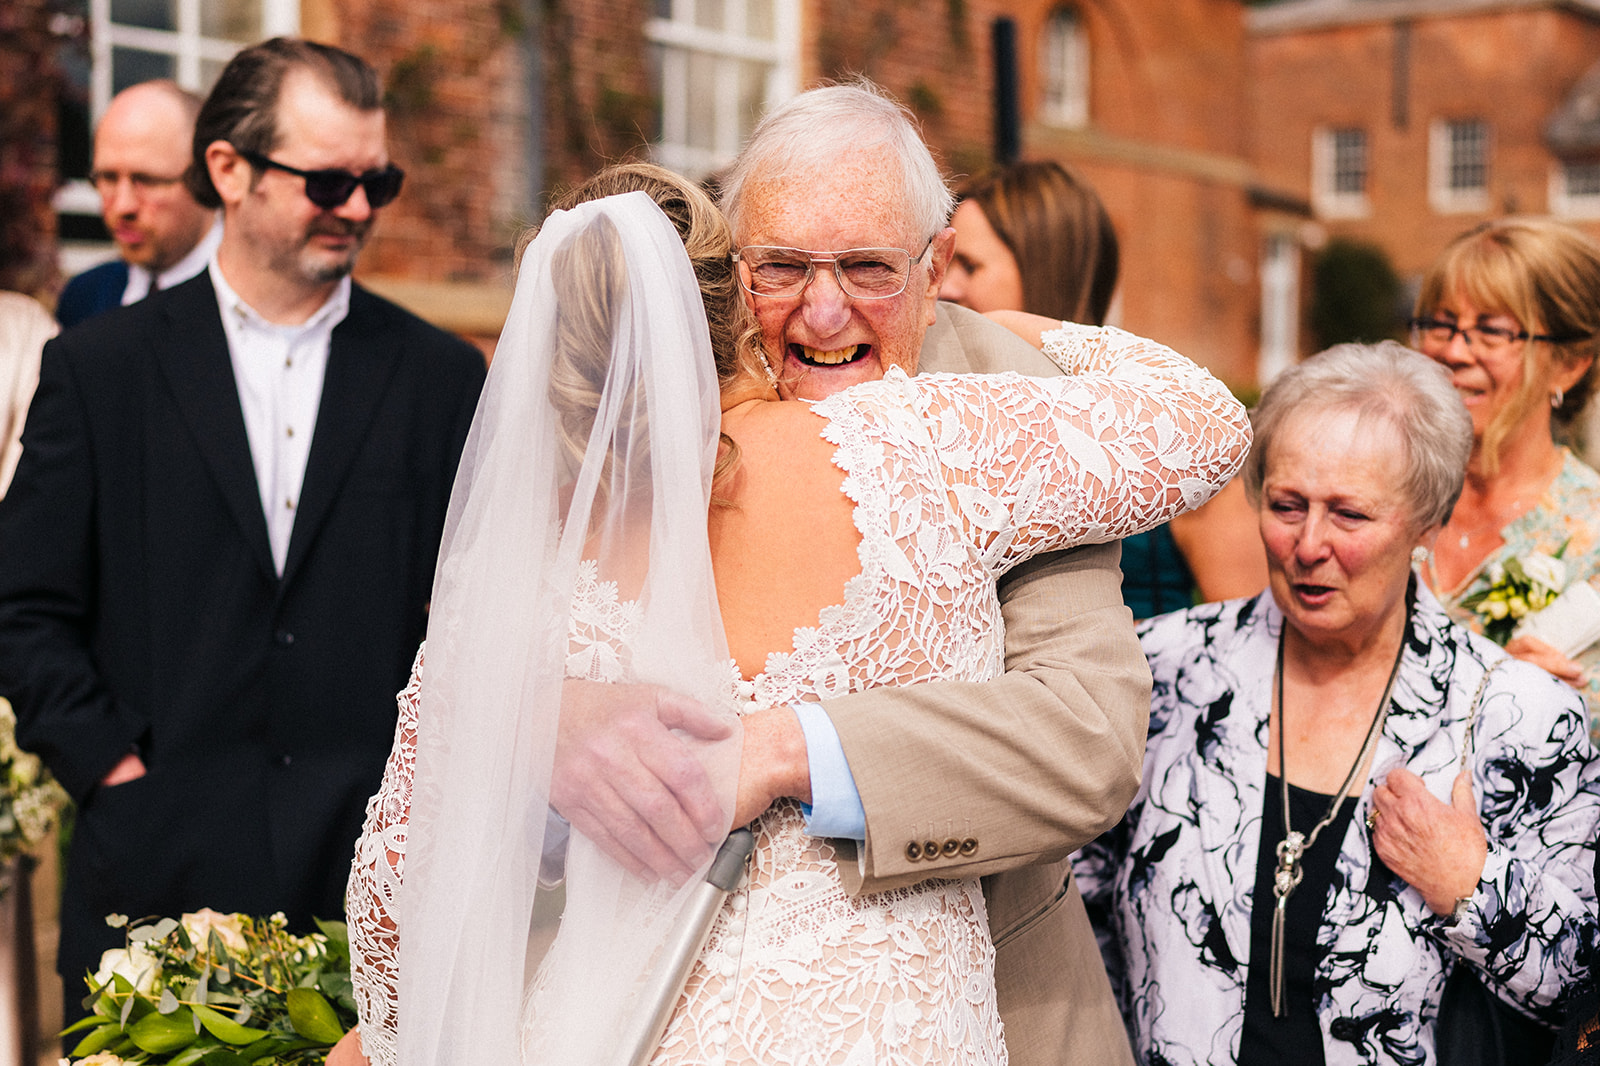 The bride hugging an elderly wedding guest